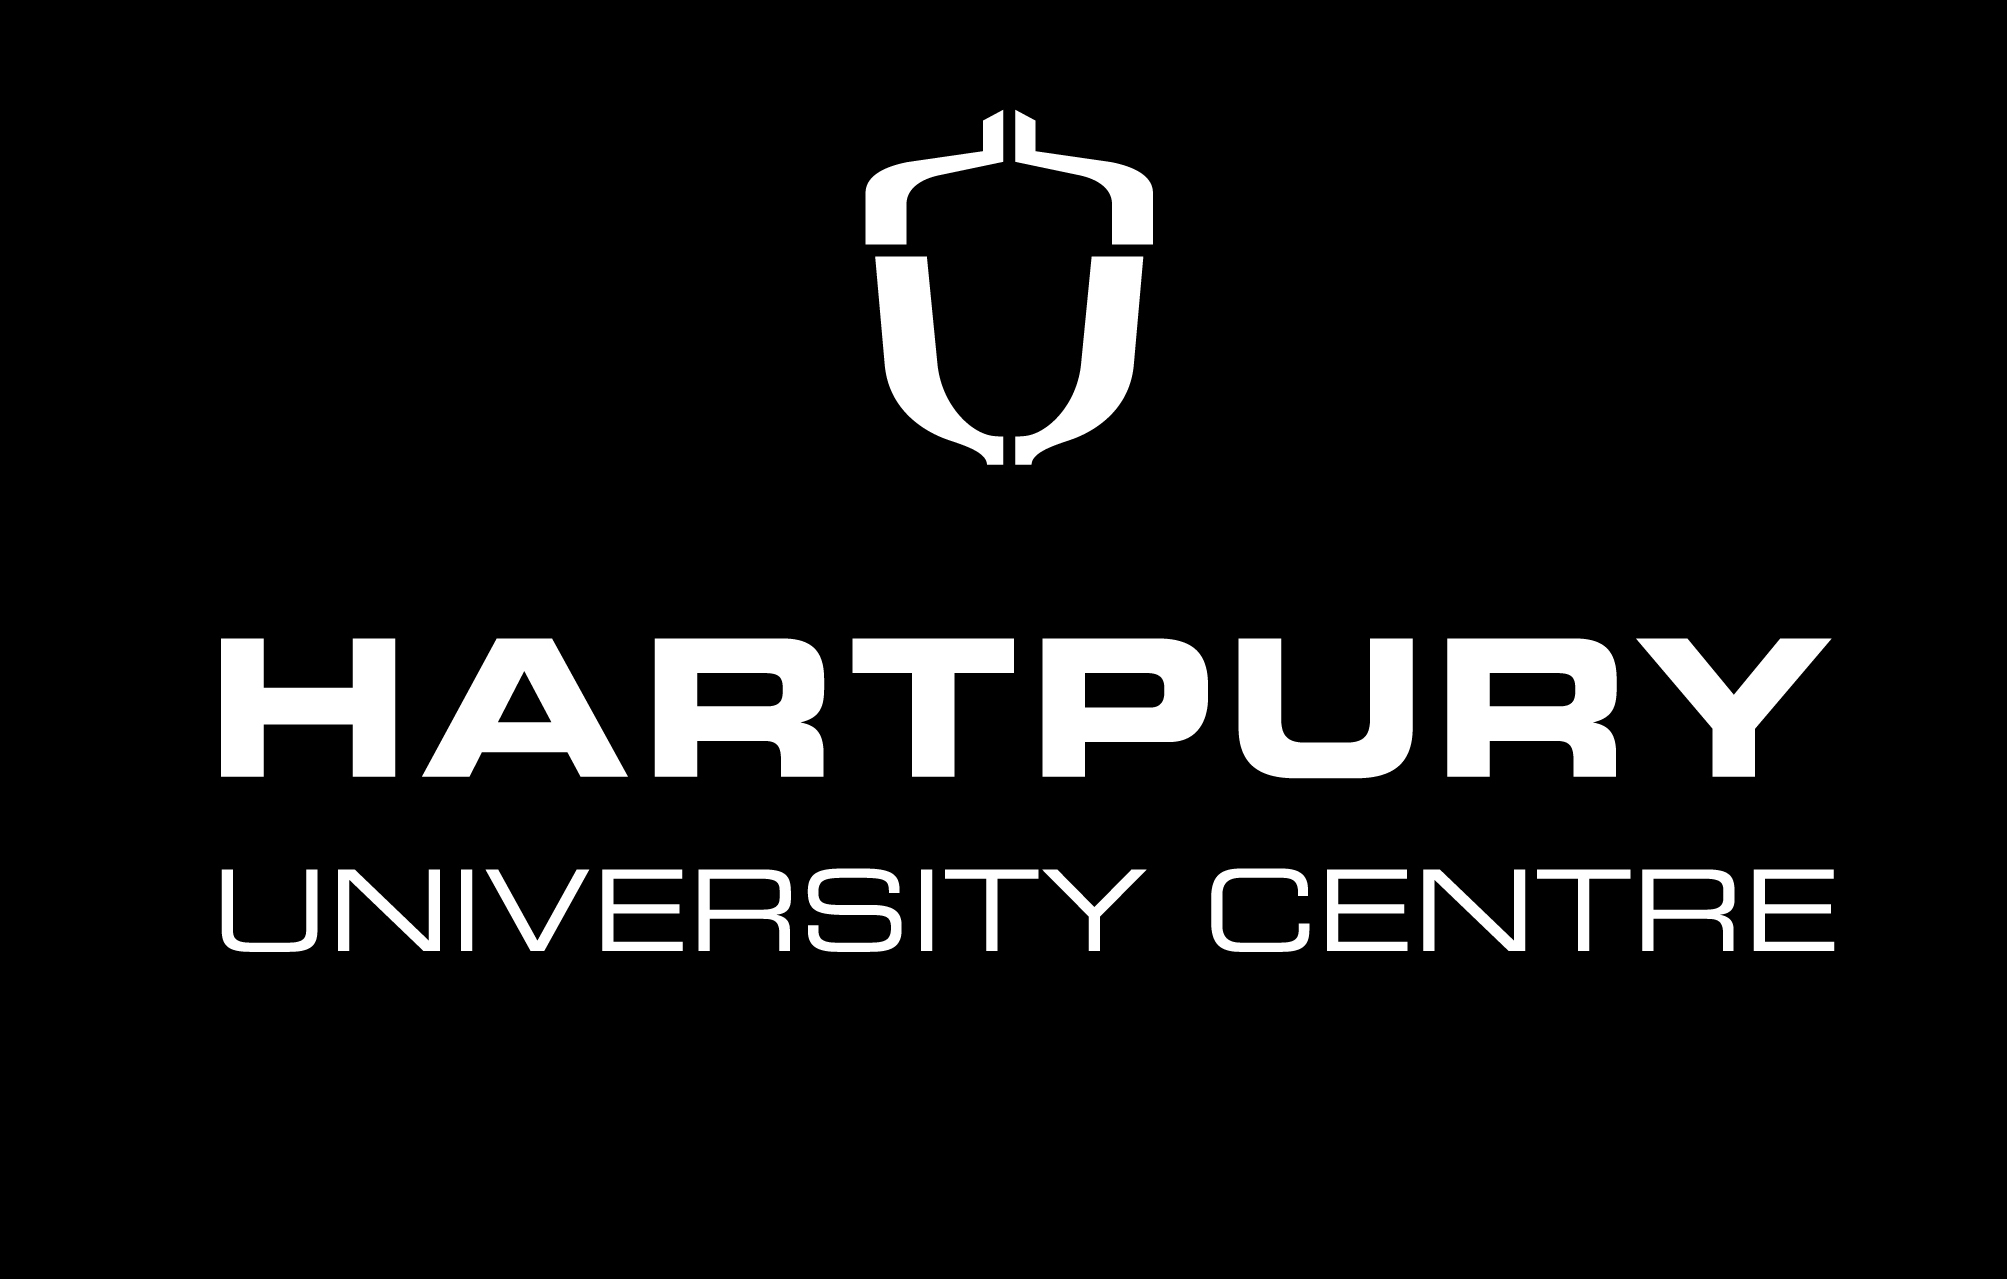 Hartpury University Centre